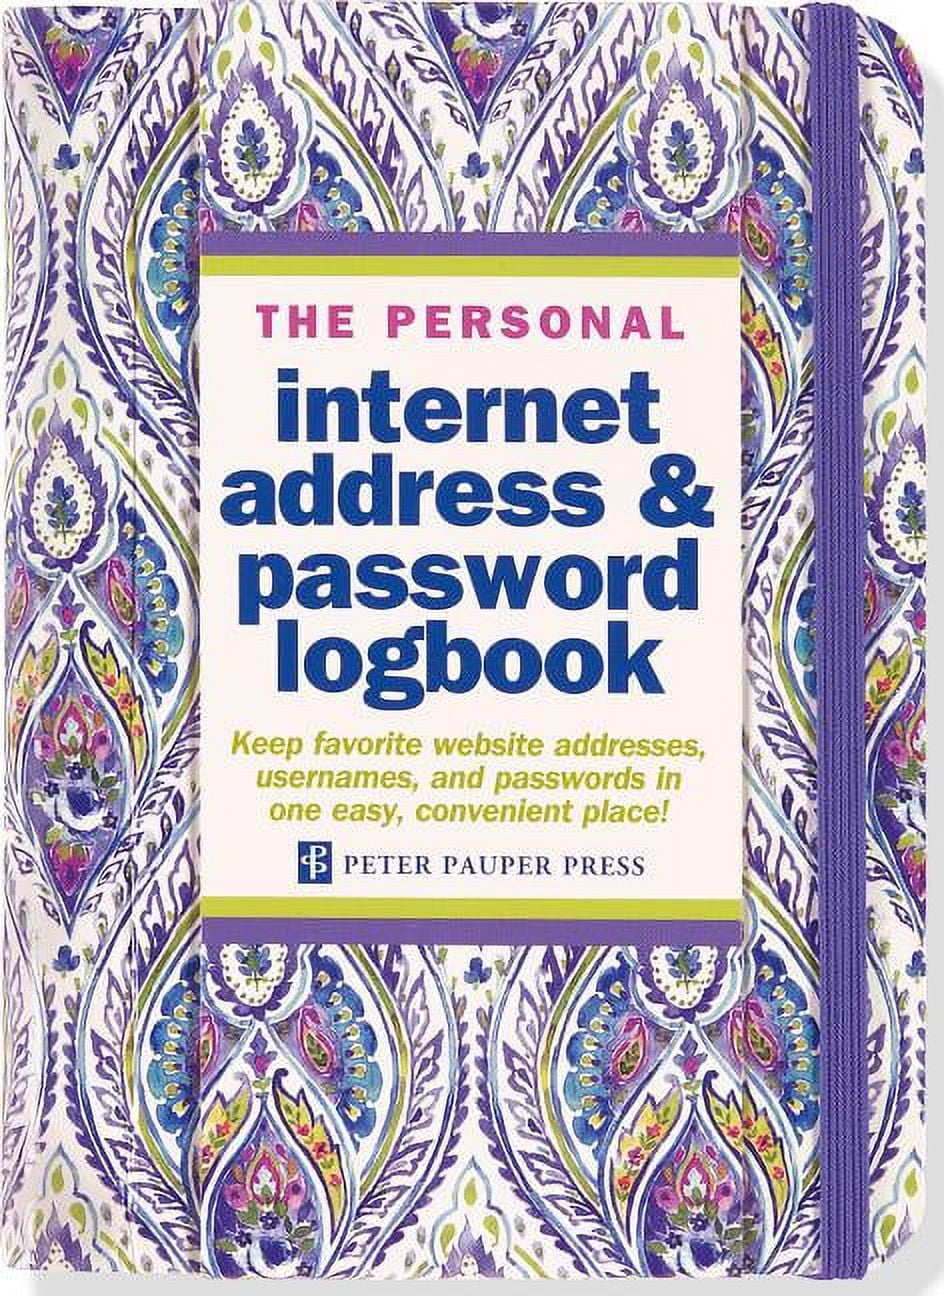 1234567890.: Internet password logbook organizer - With